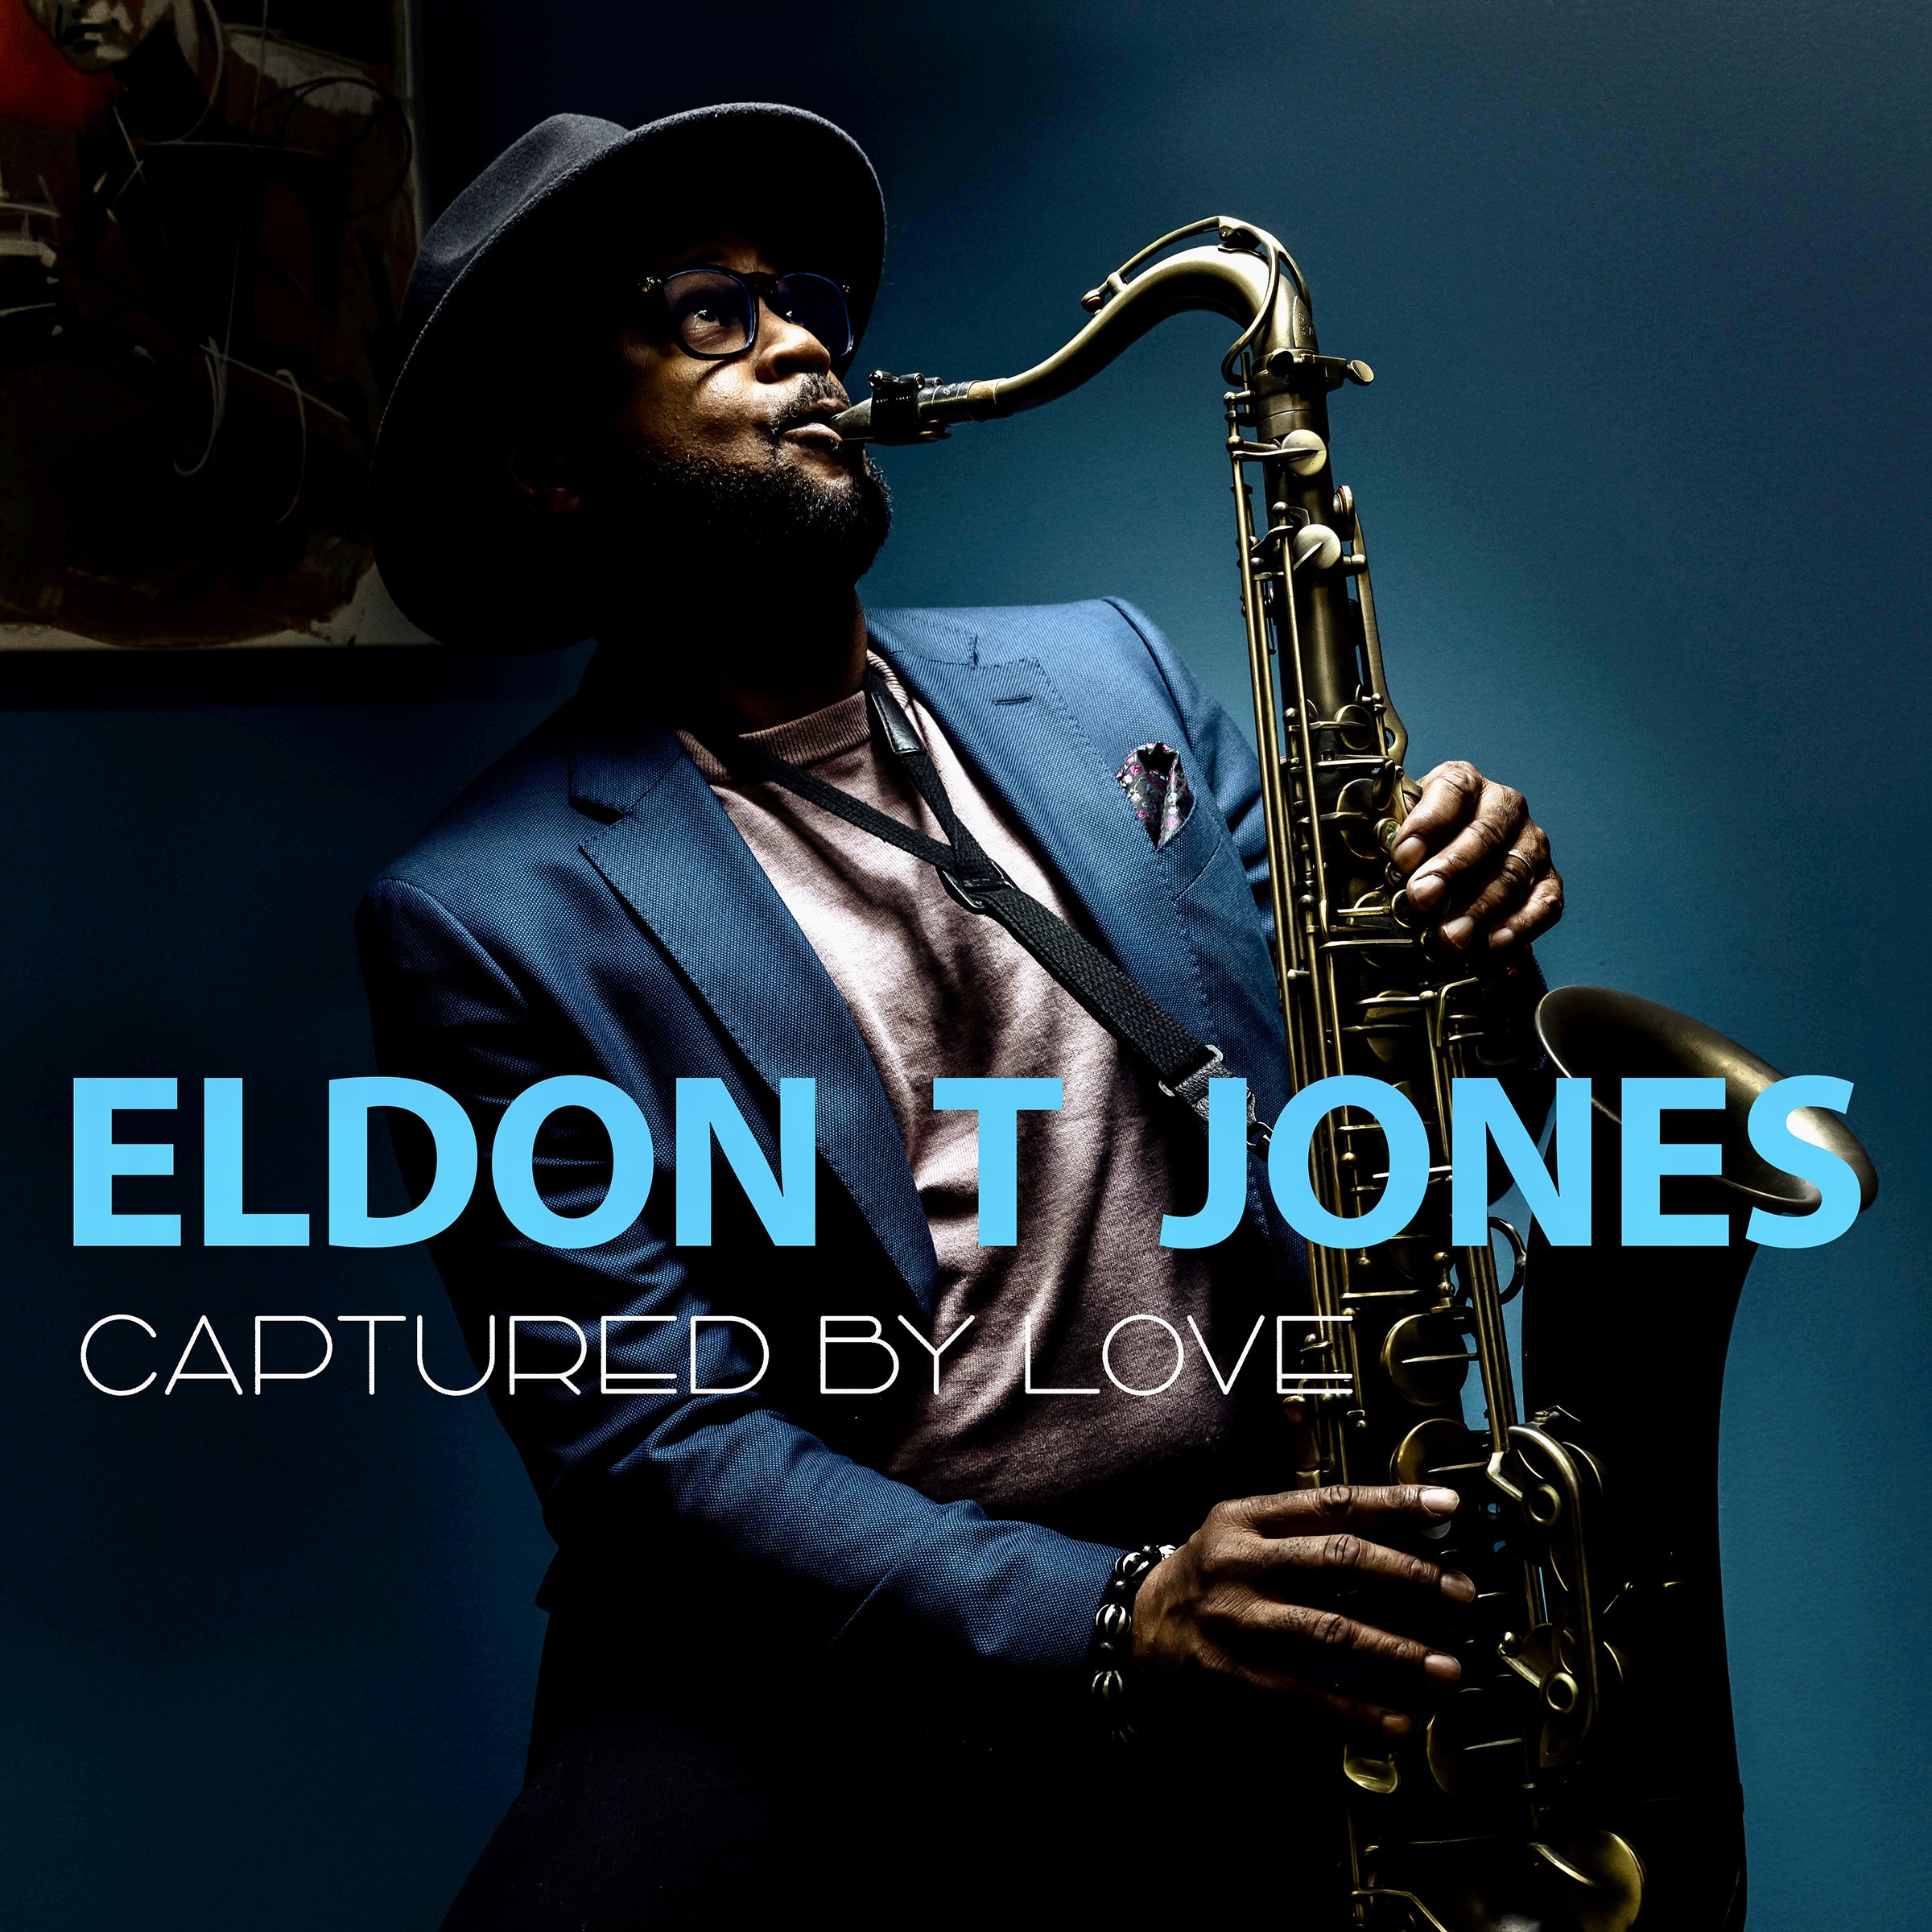 Eldon T Jones "Captured by Love" Single